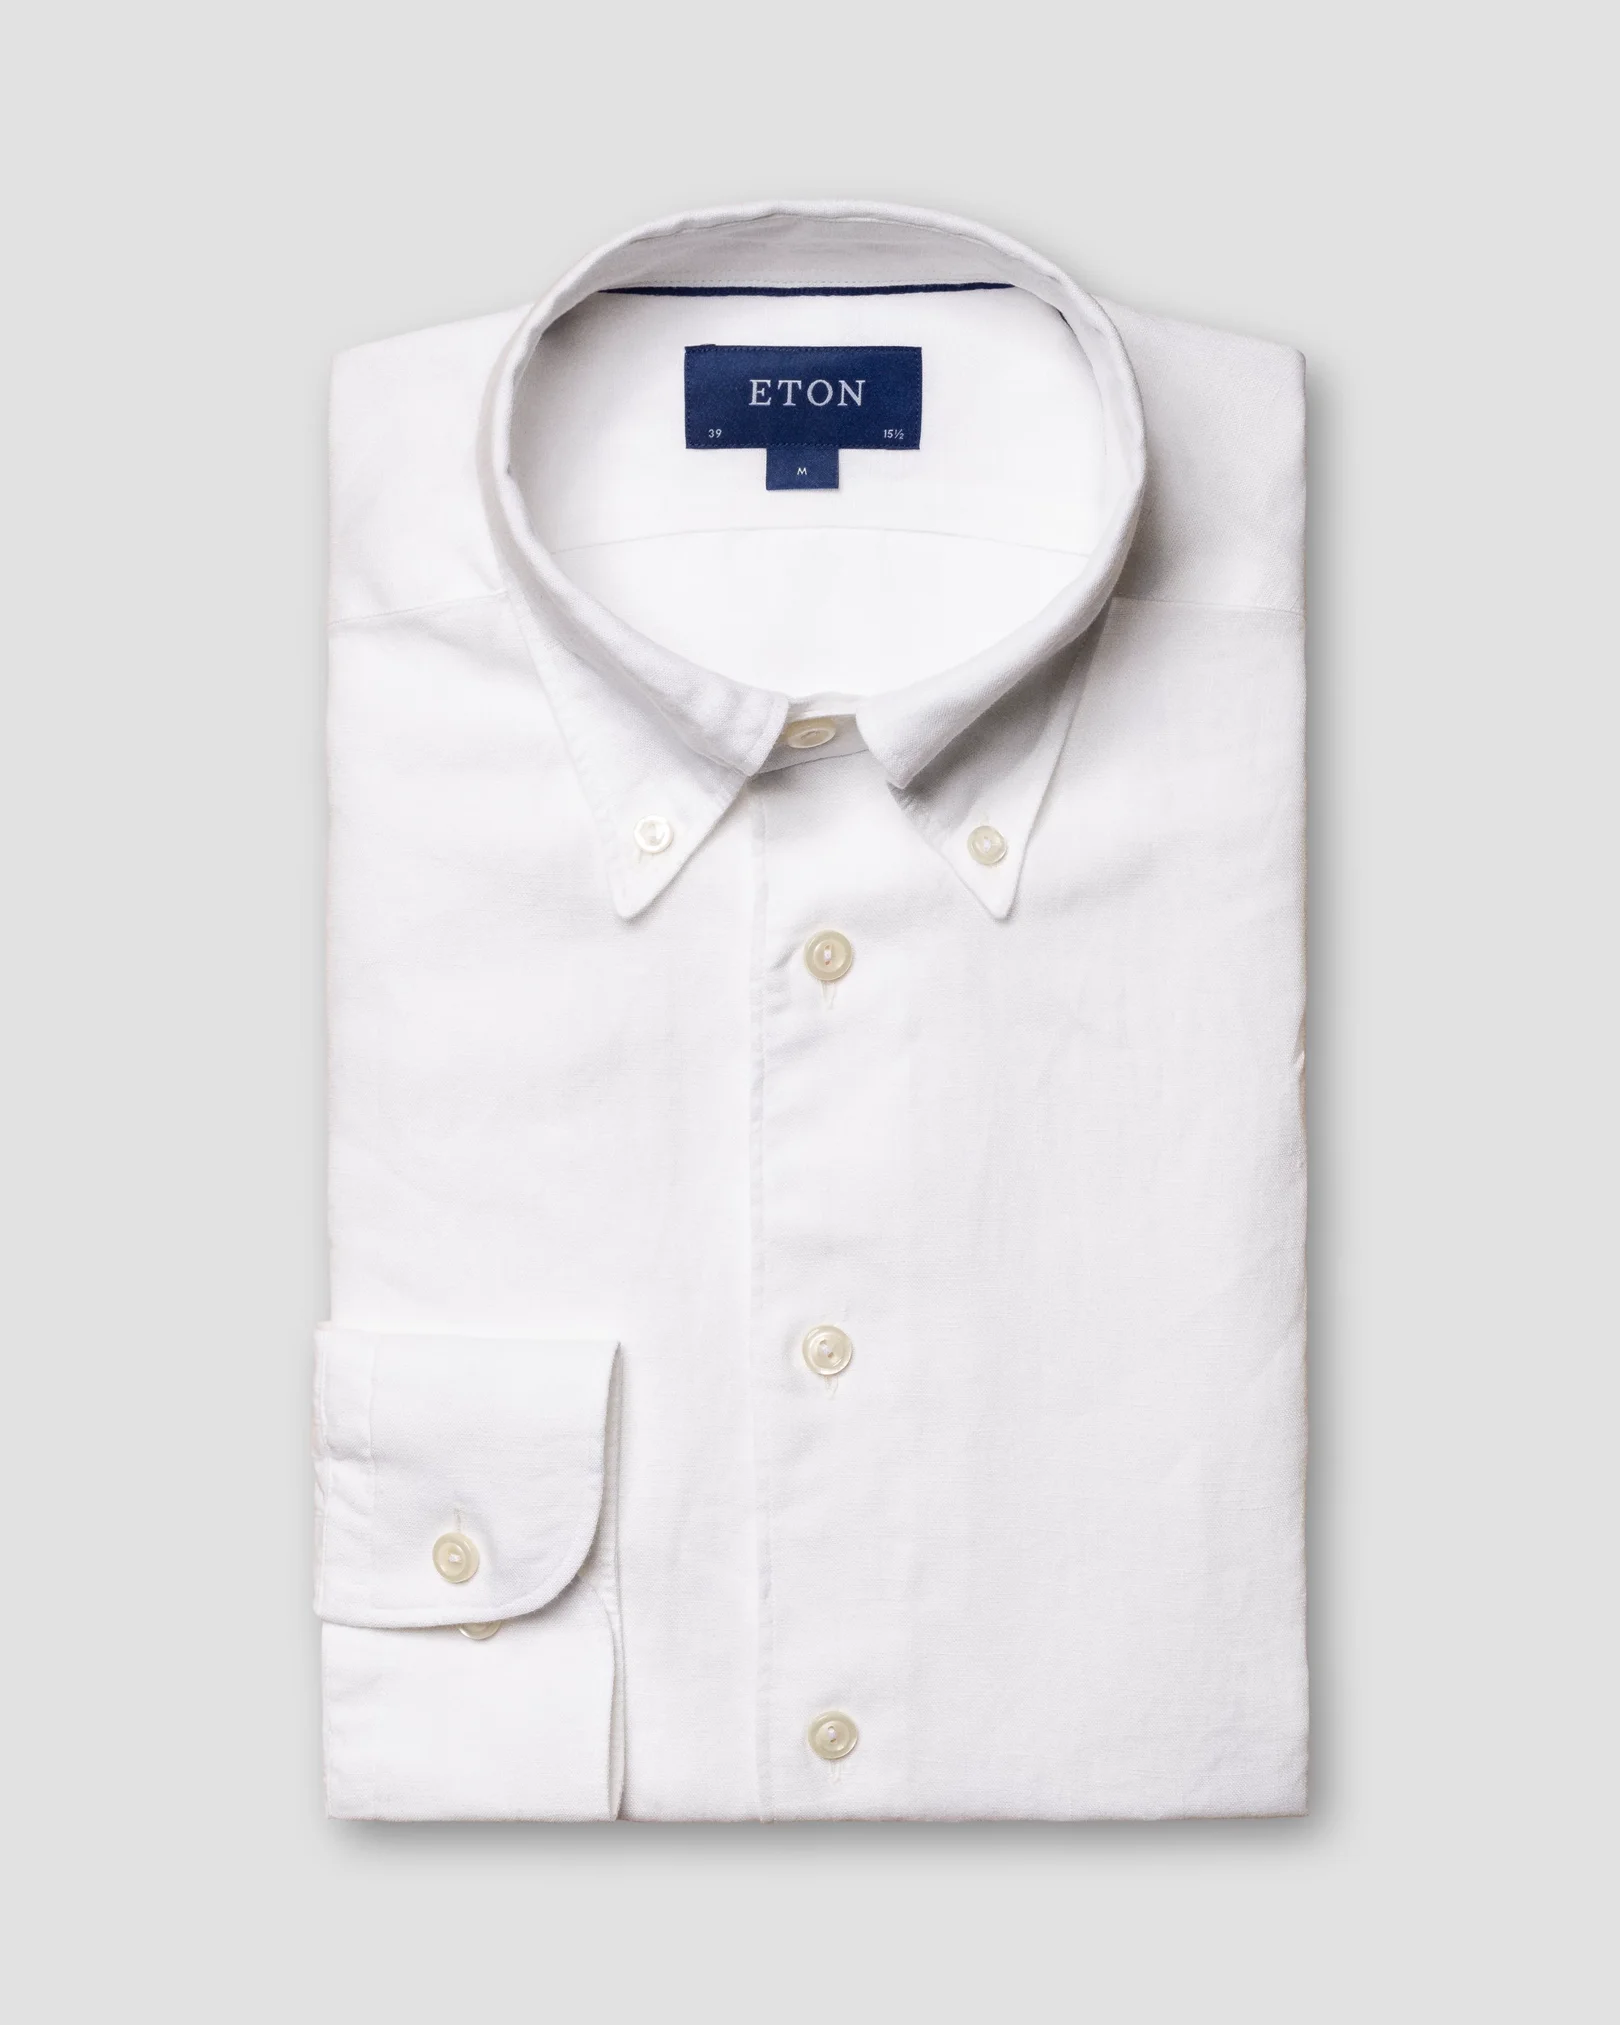 Eton - white linen button down soft